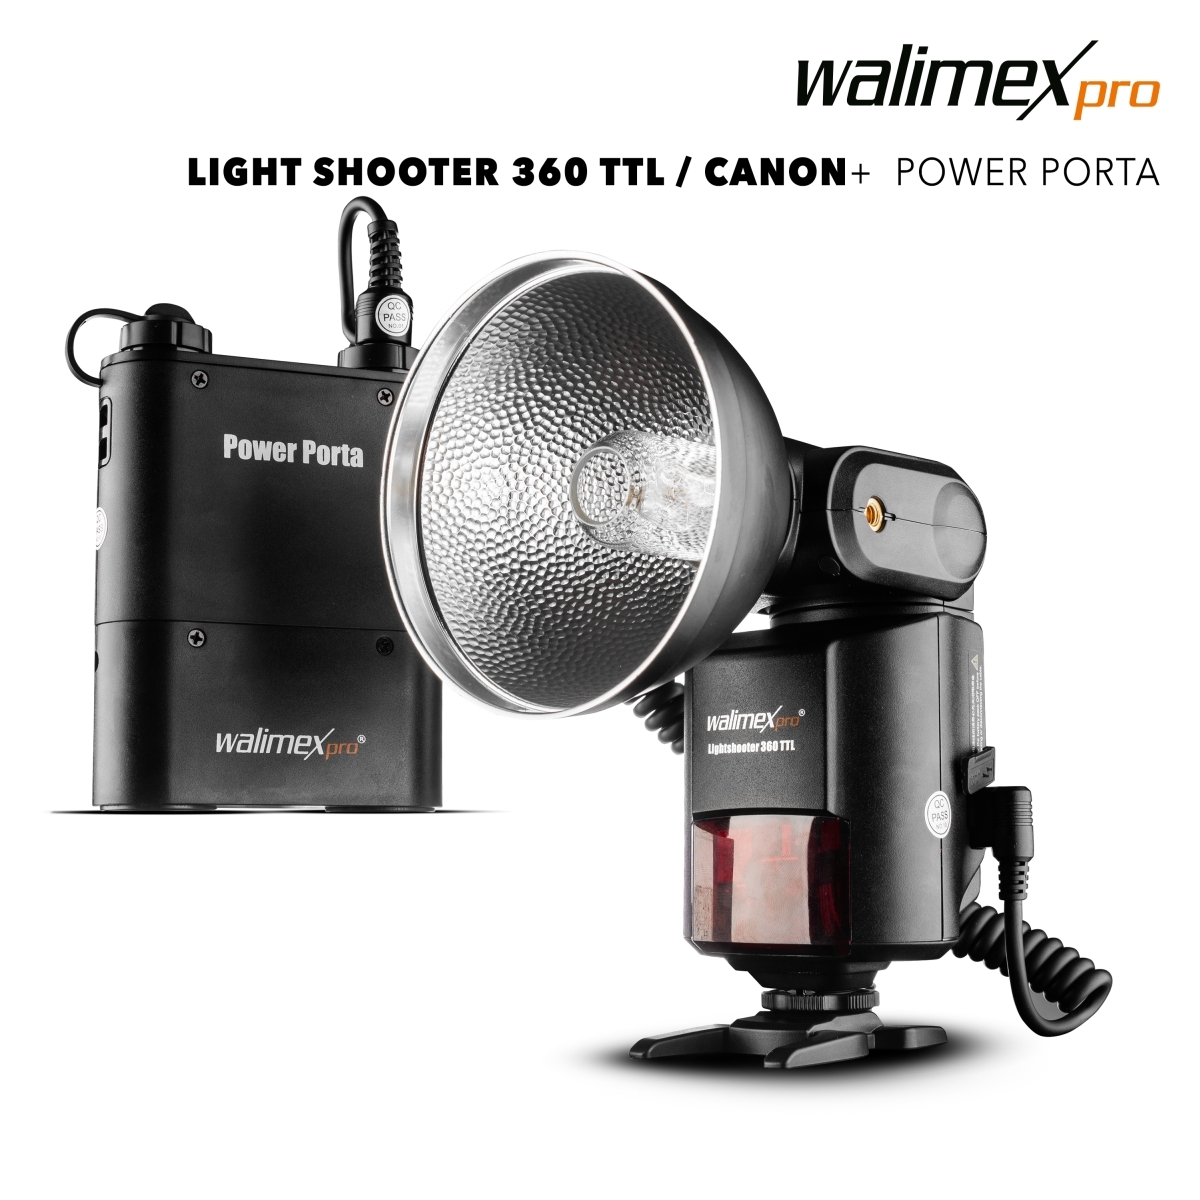 Walimex pro Light Shooter 360 TTL für Canon + Power Porta...